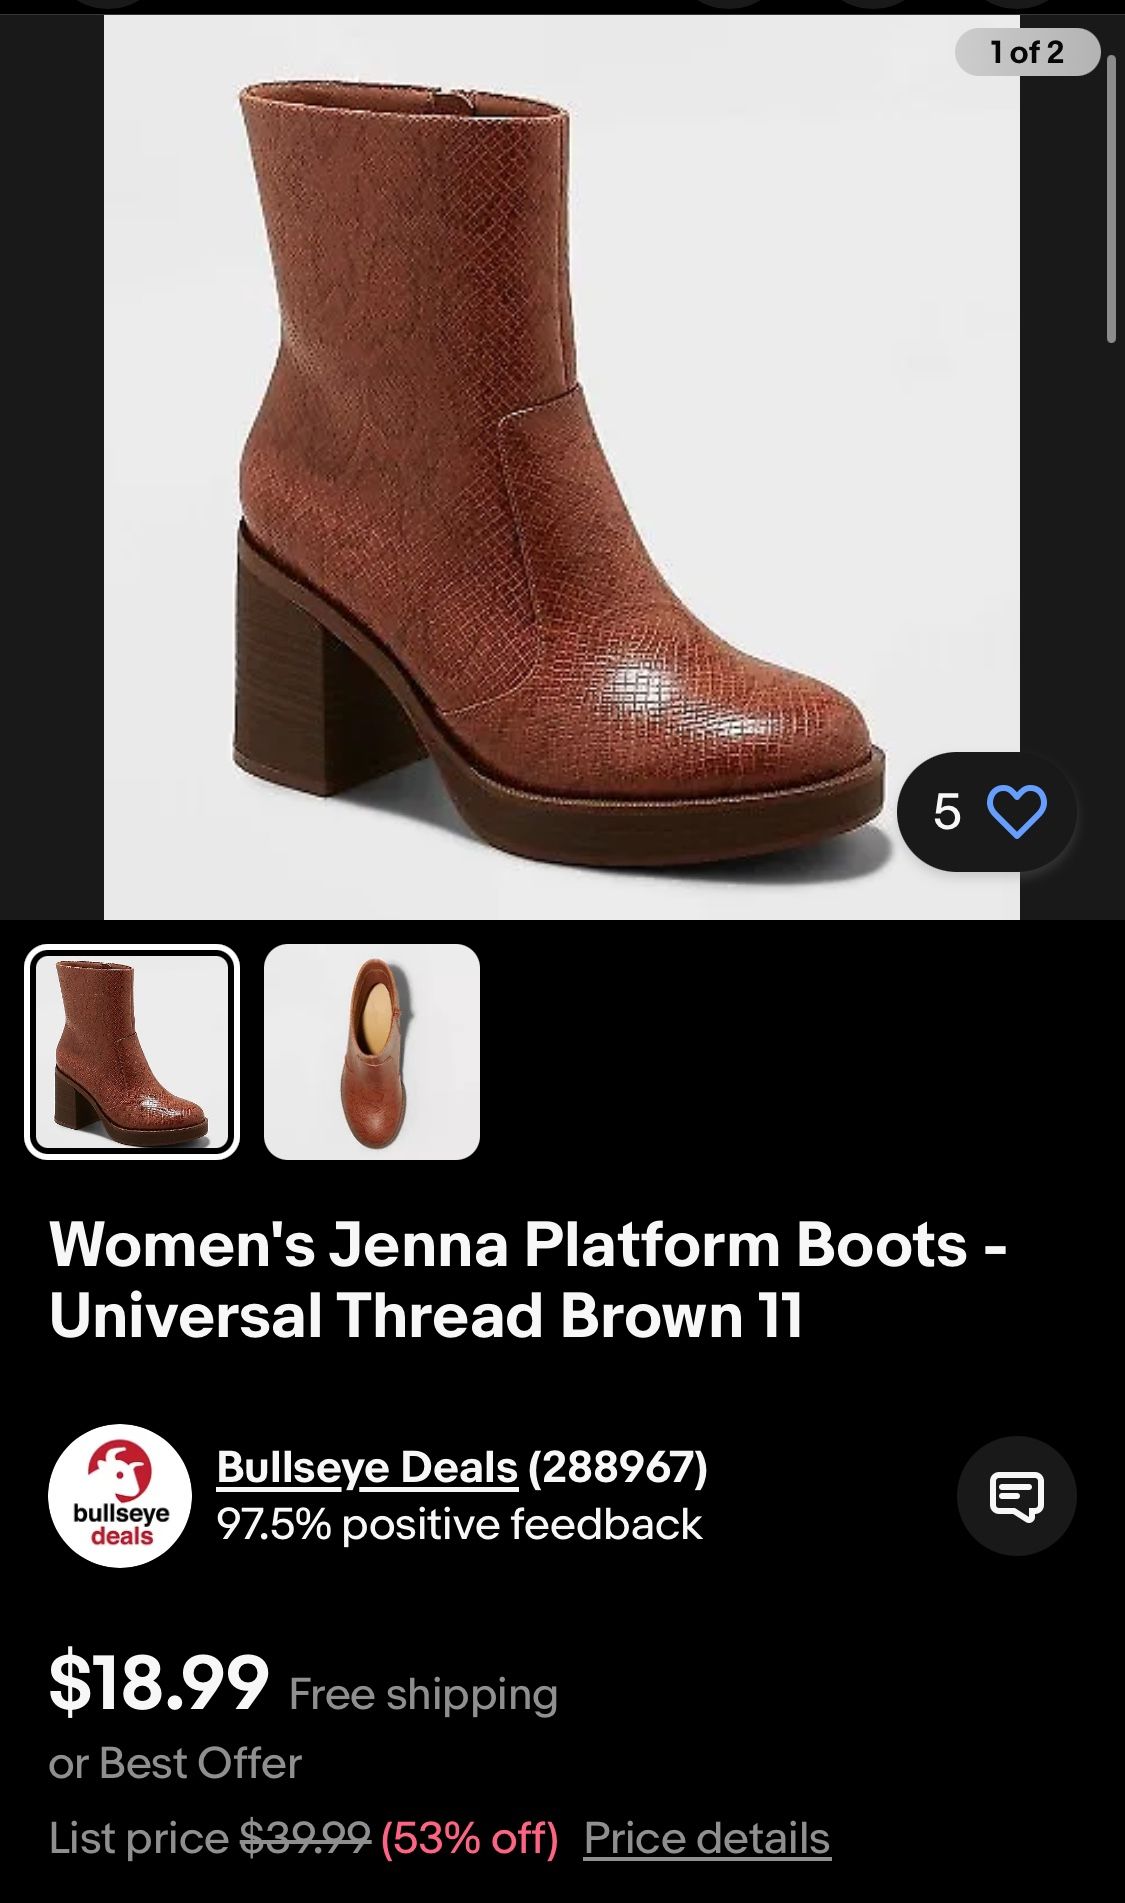 Women's Jenna Platform Boots - Universal Thread Brown Sizes 6 To 12 